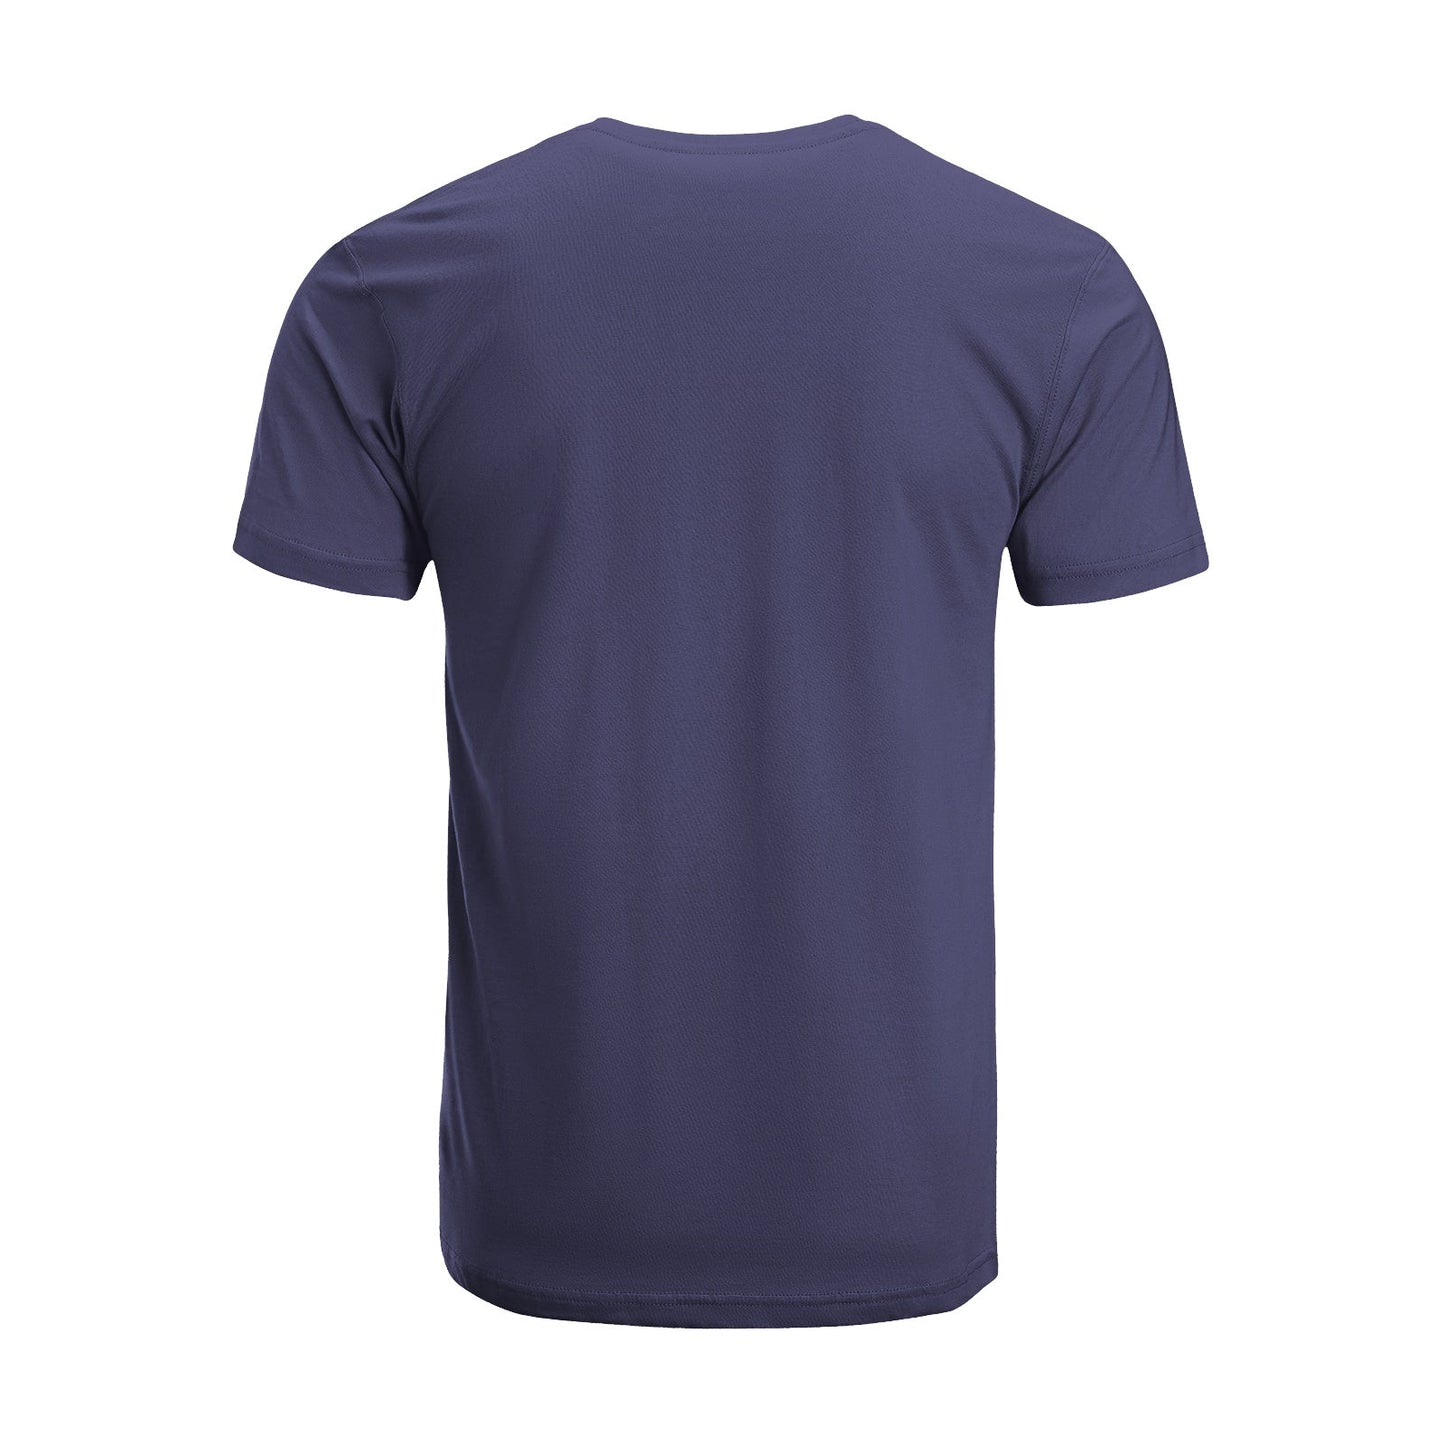 Unisex Short Sleeve Crew Neck Cotton Jersey T-Shirt MOM 42